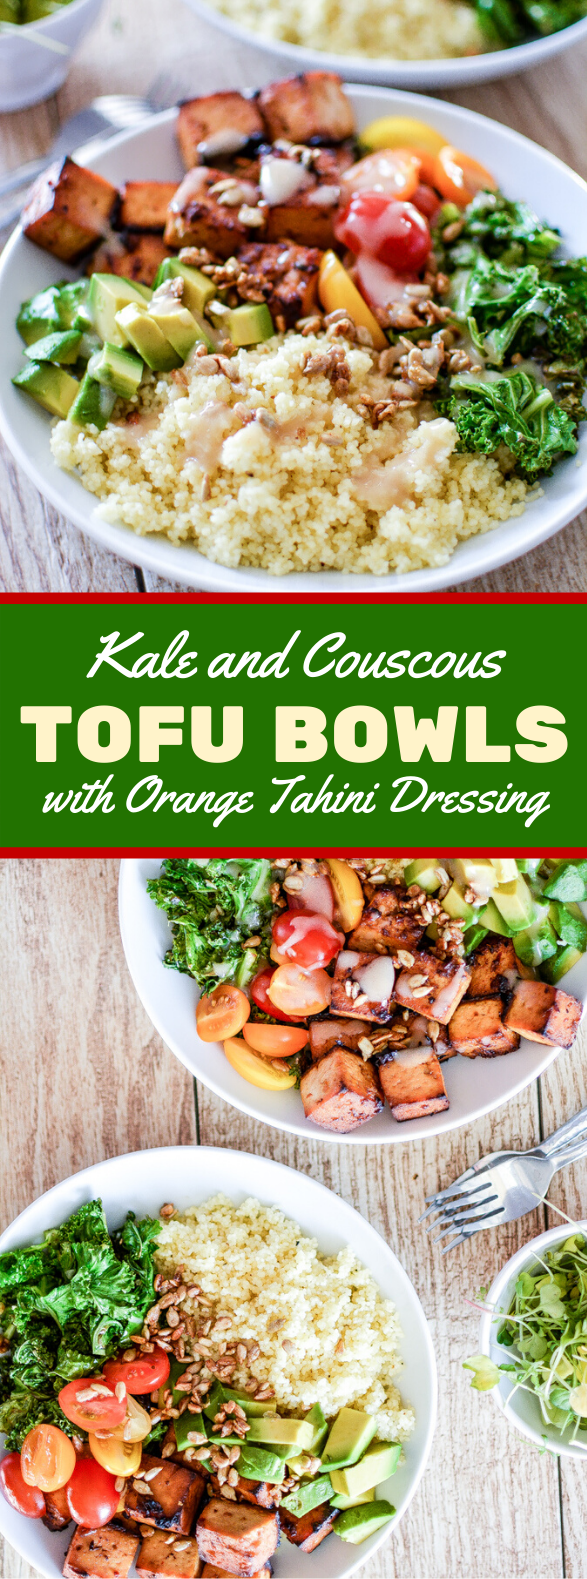 Kale and Couscous Tofu Bowls with Orange Tahini Dressing #vegetarian #weeknightdinner